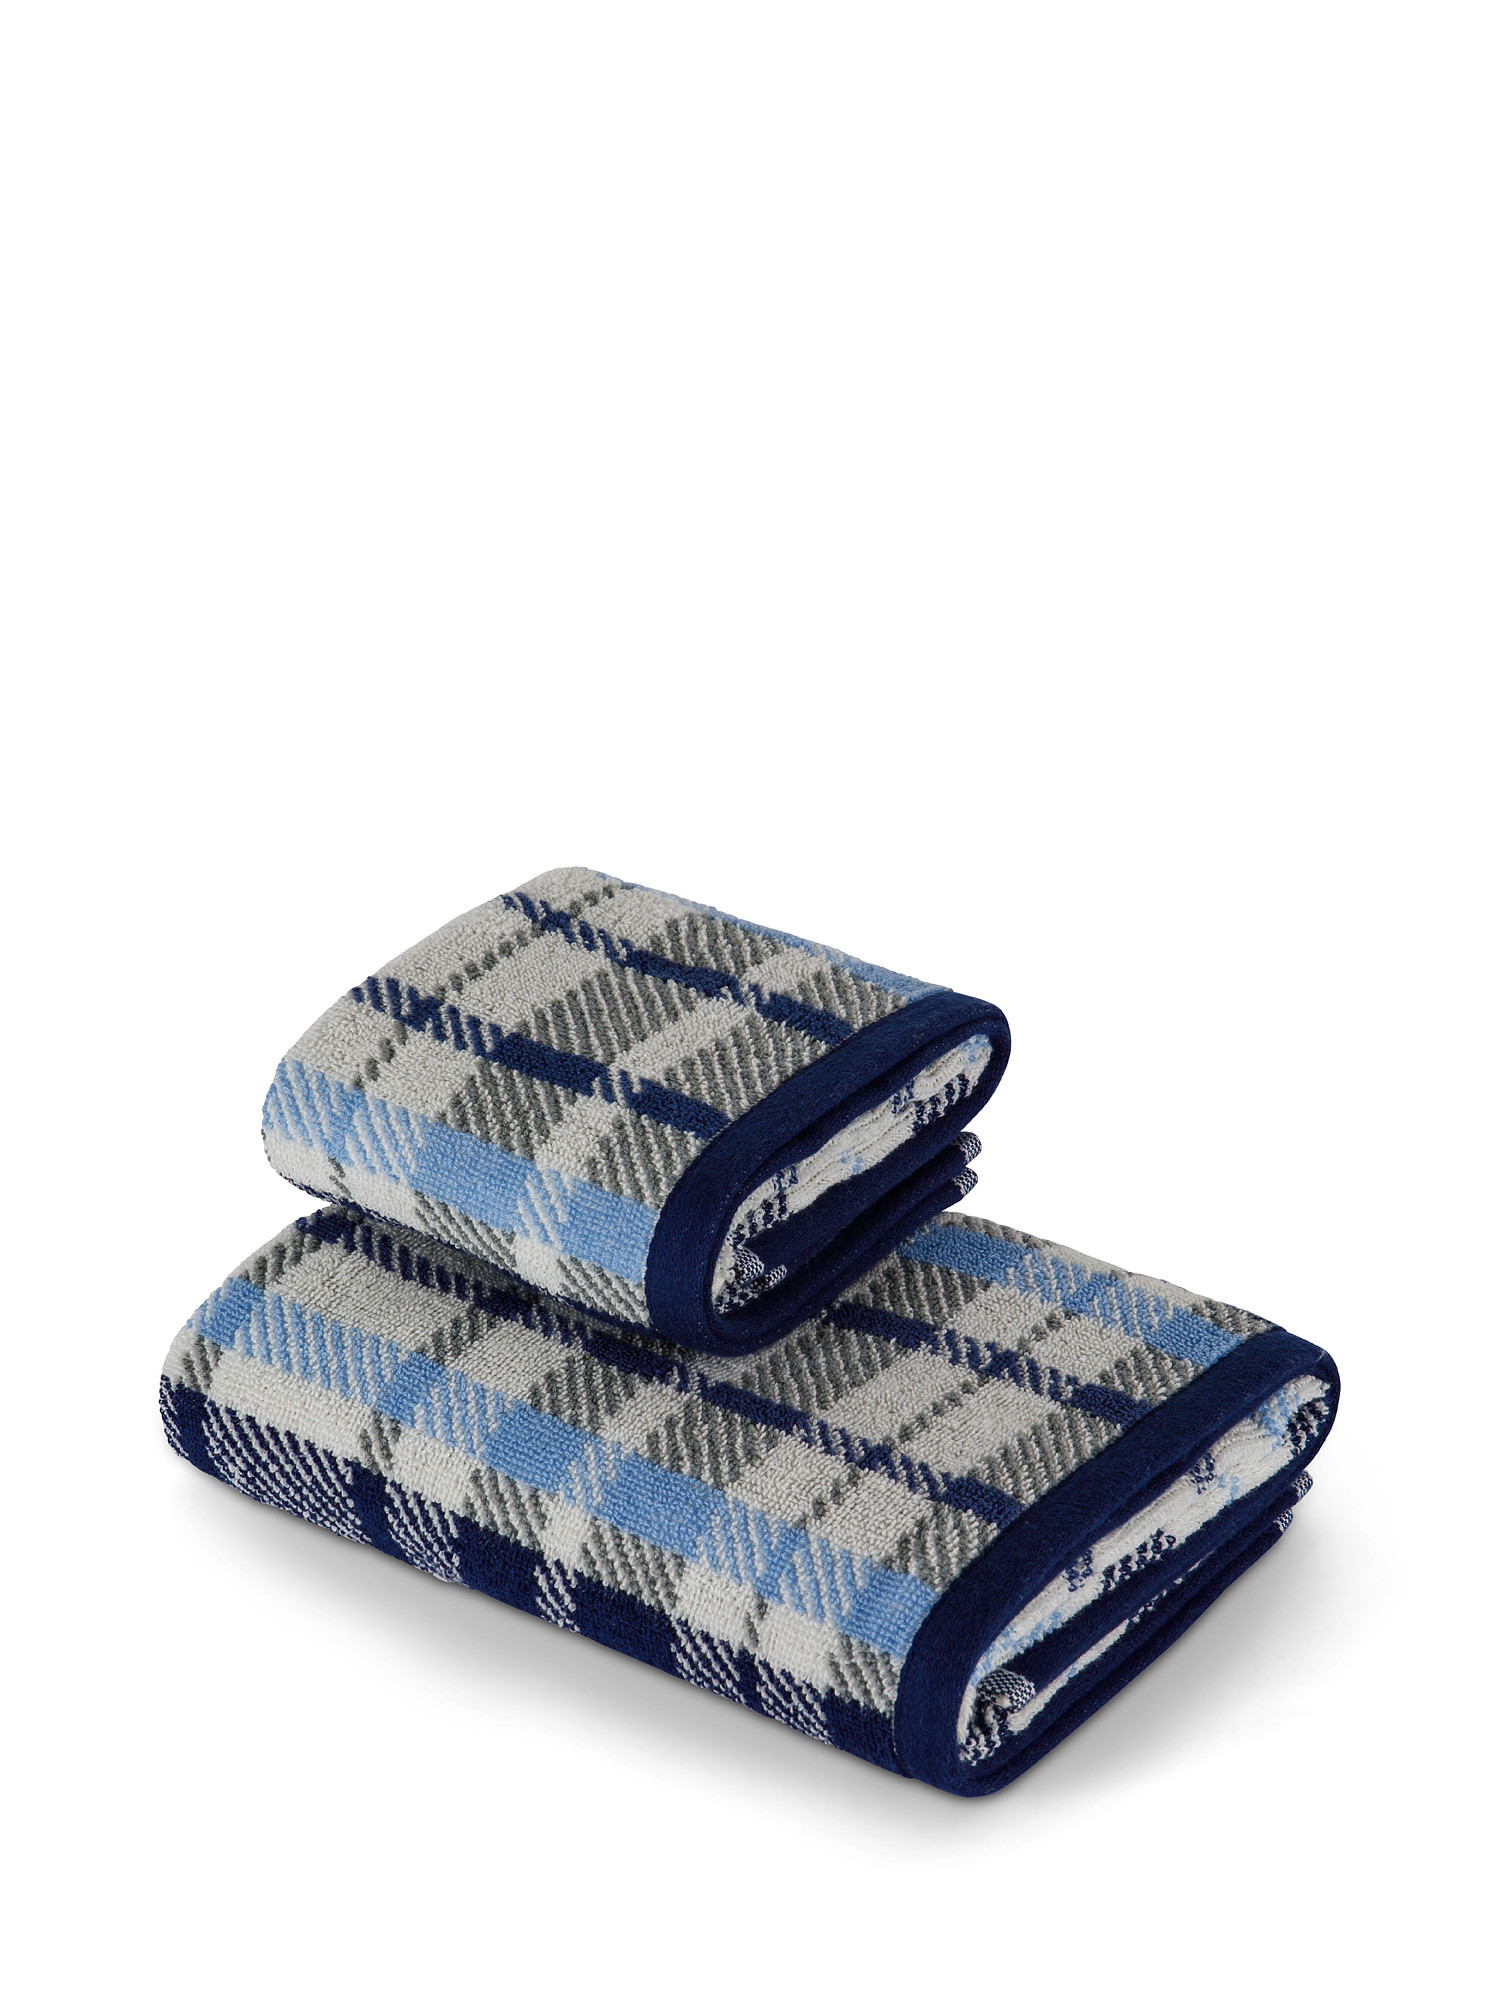 Asciugamano cotone jacquard motivo tartan, Blu, large